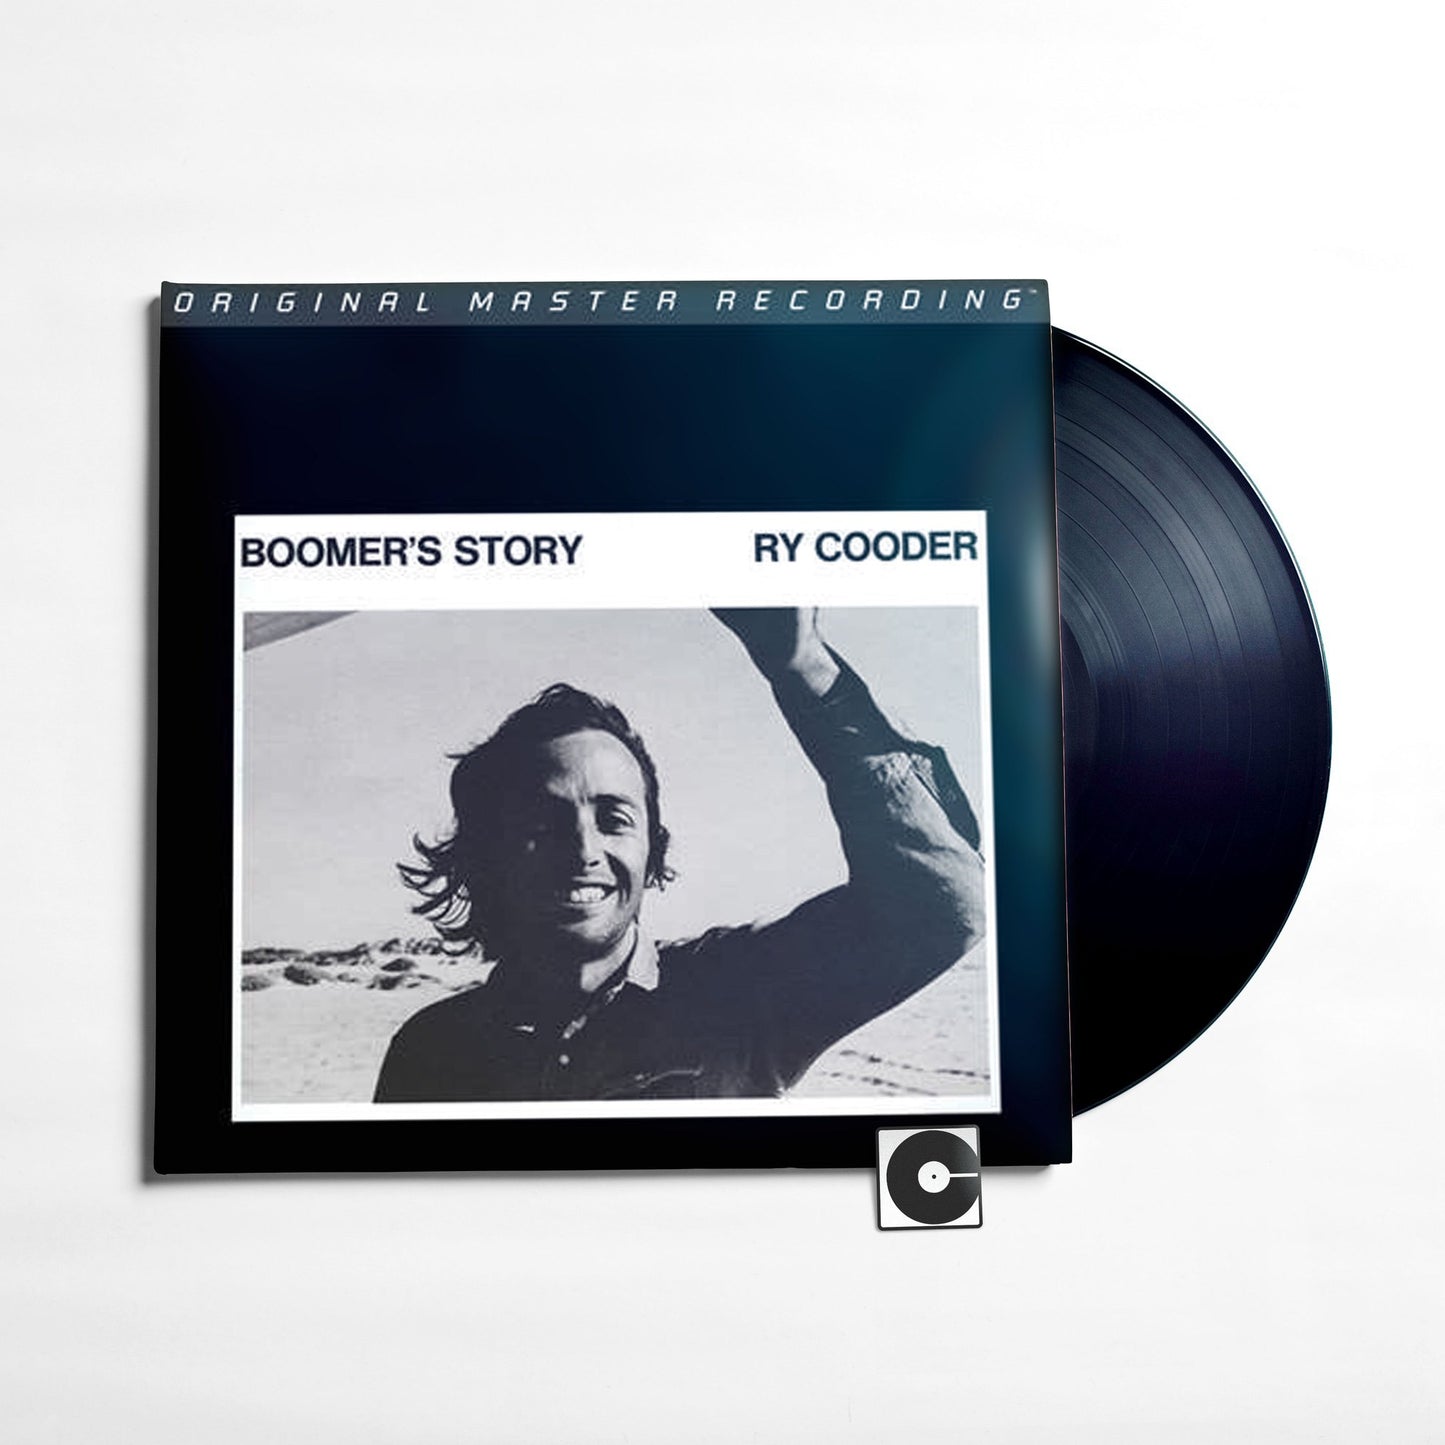 Ry Cooder - "Boomer's Story" MoFi